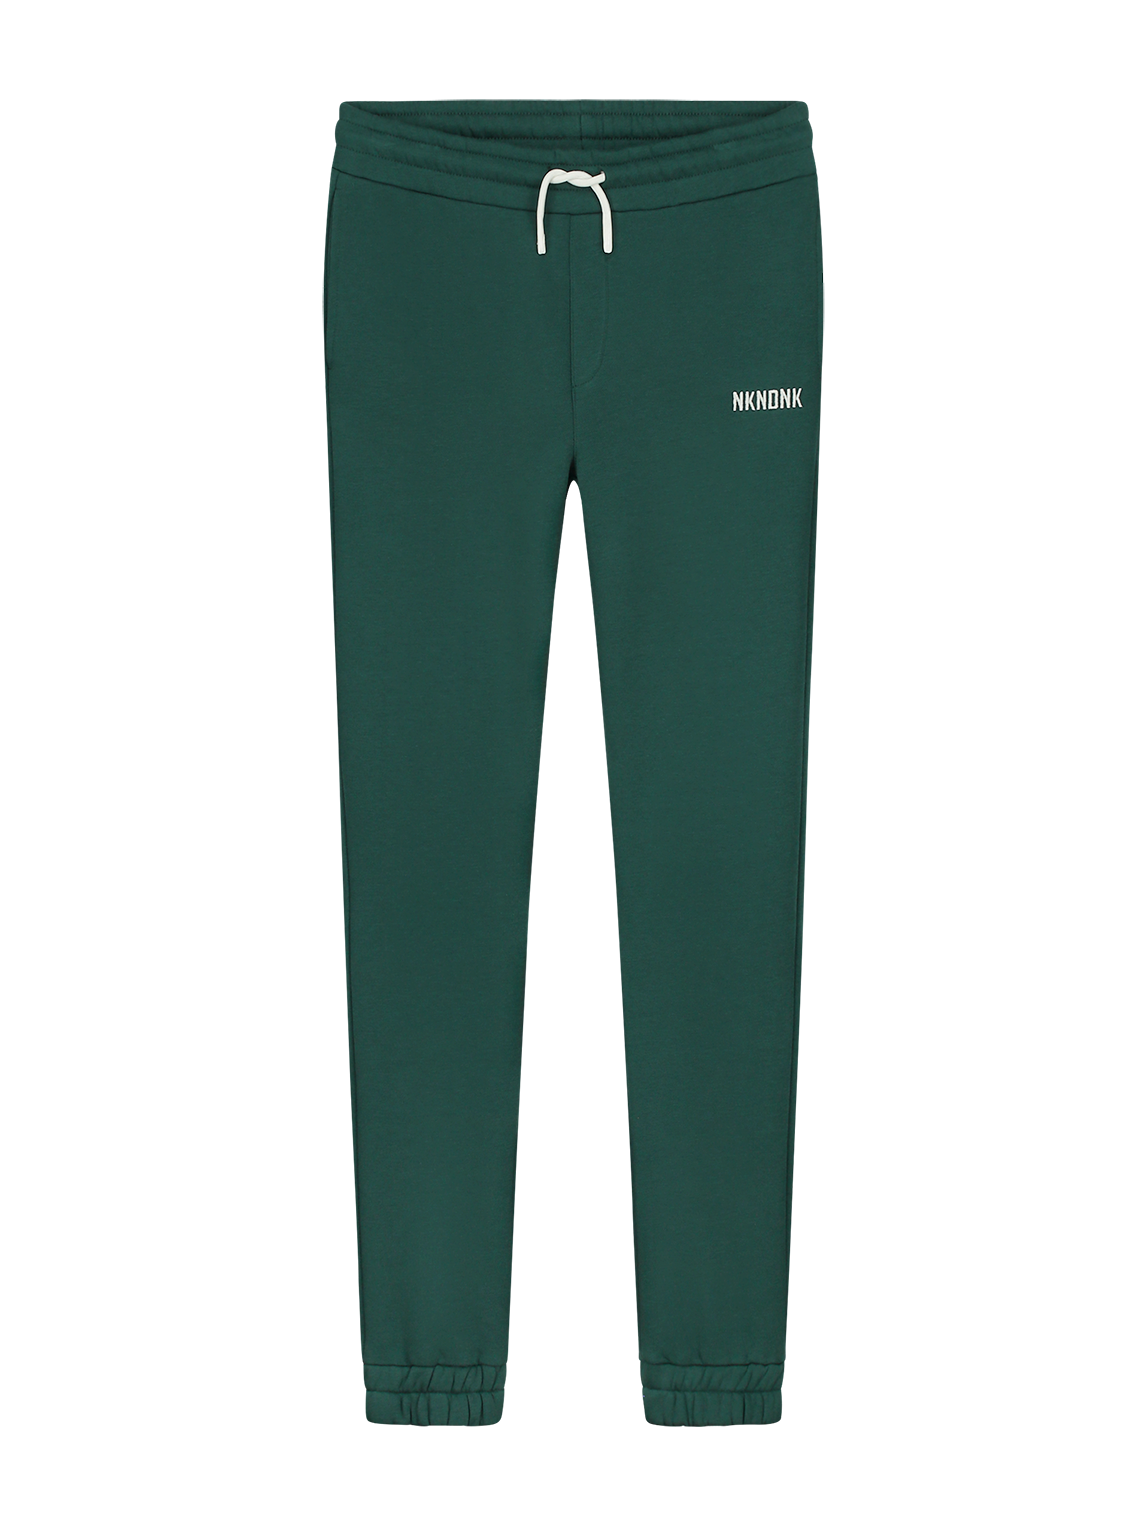 Jongens Varil Sweatpants van Nik & Nik in de kleur Varsity Green in maat 164.